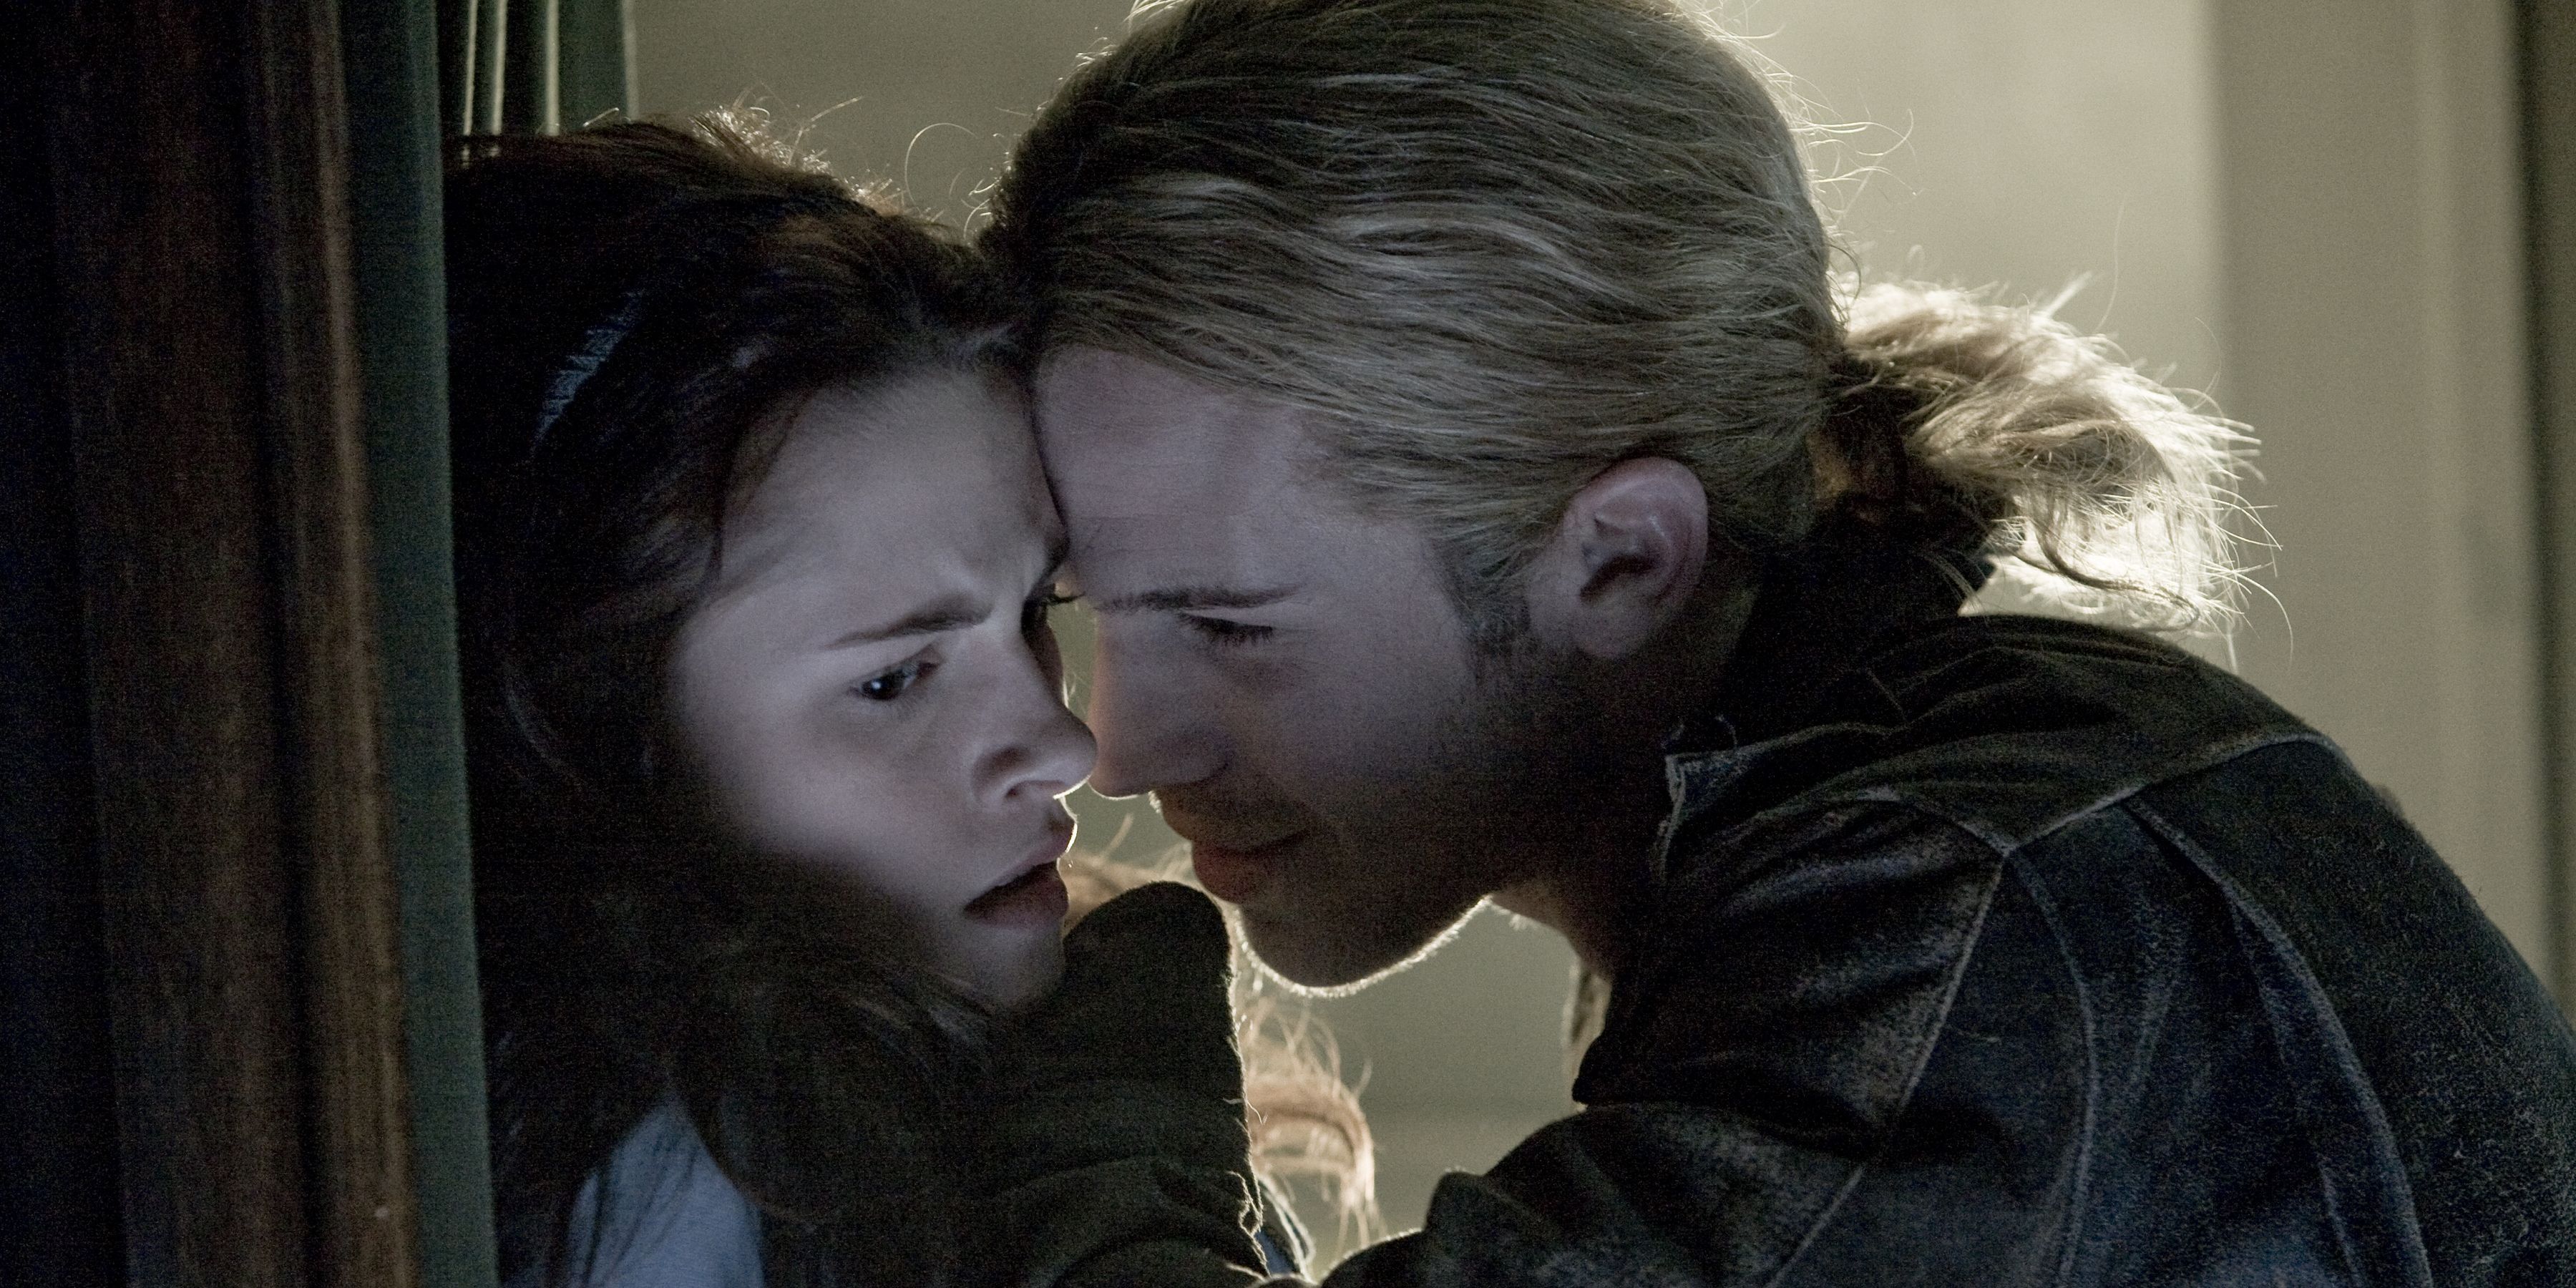 James terrorizes Bella in Twilight.